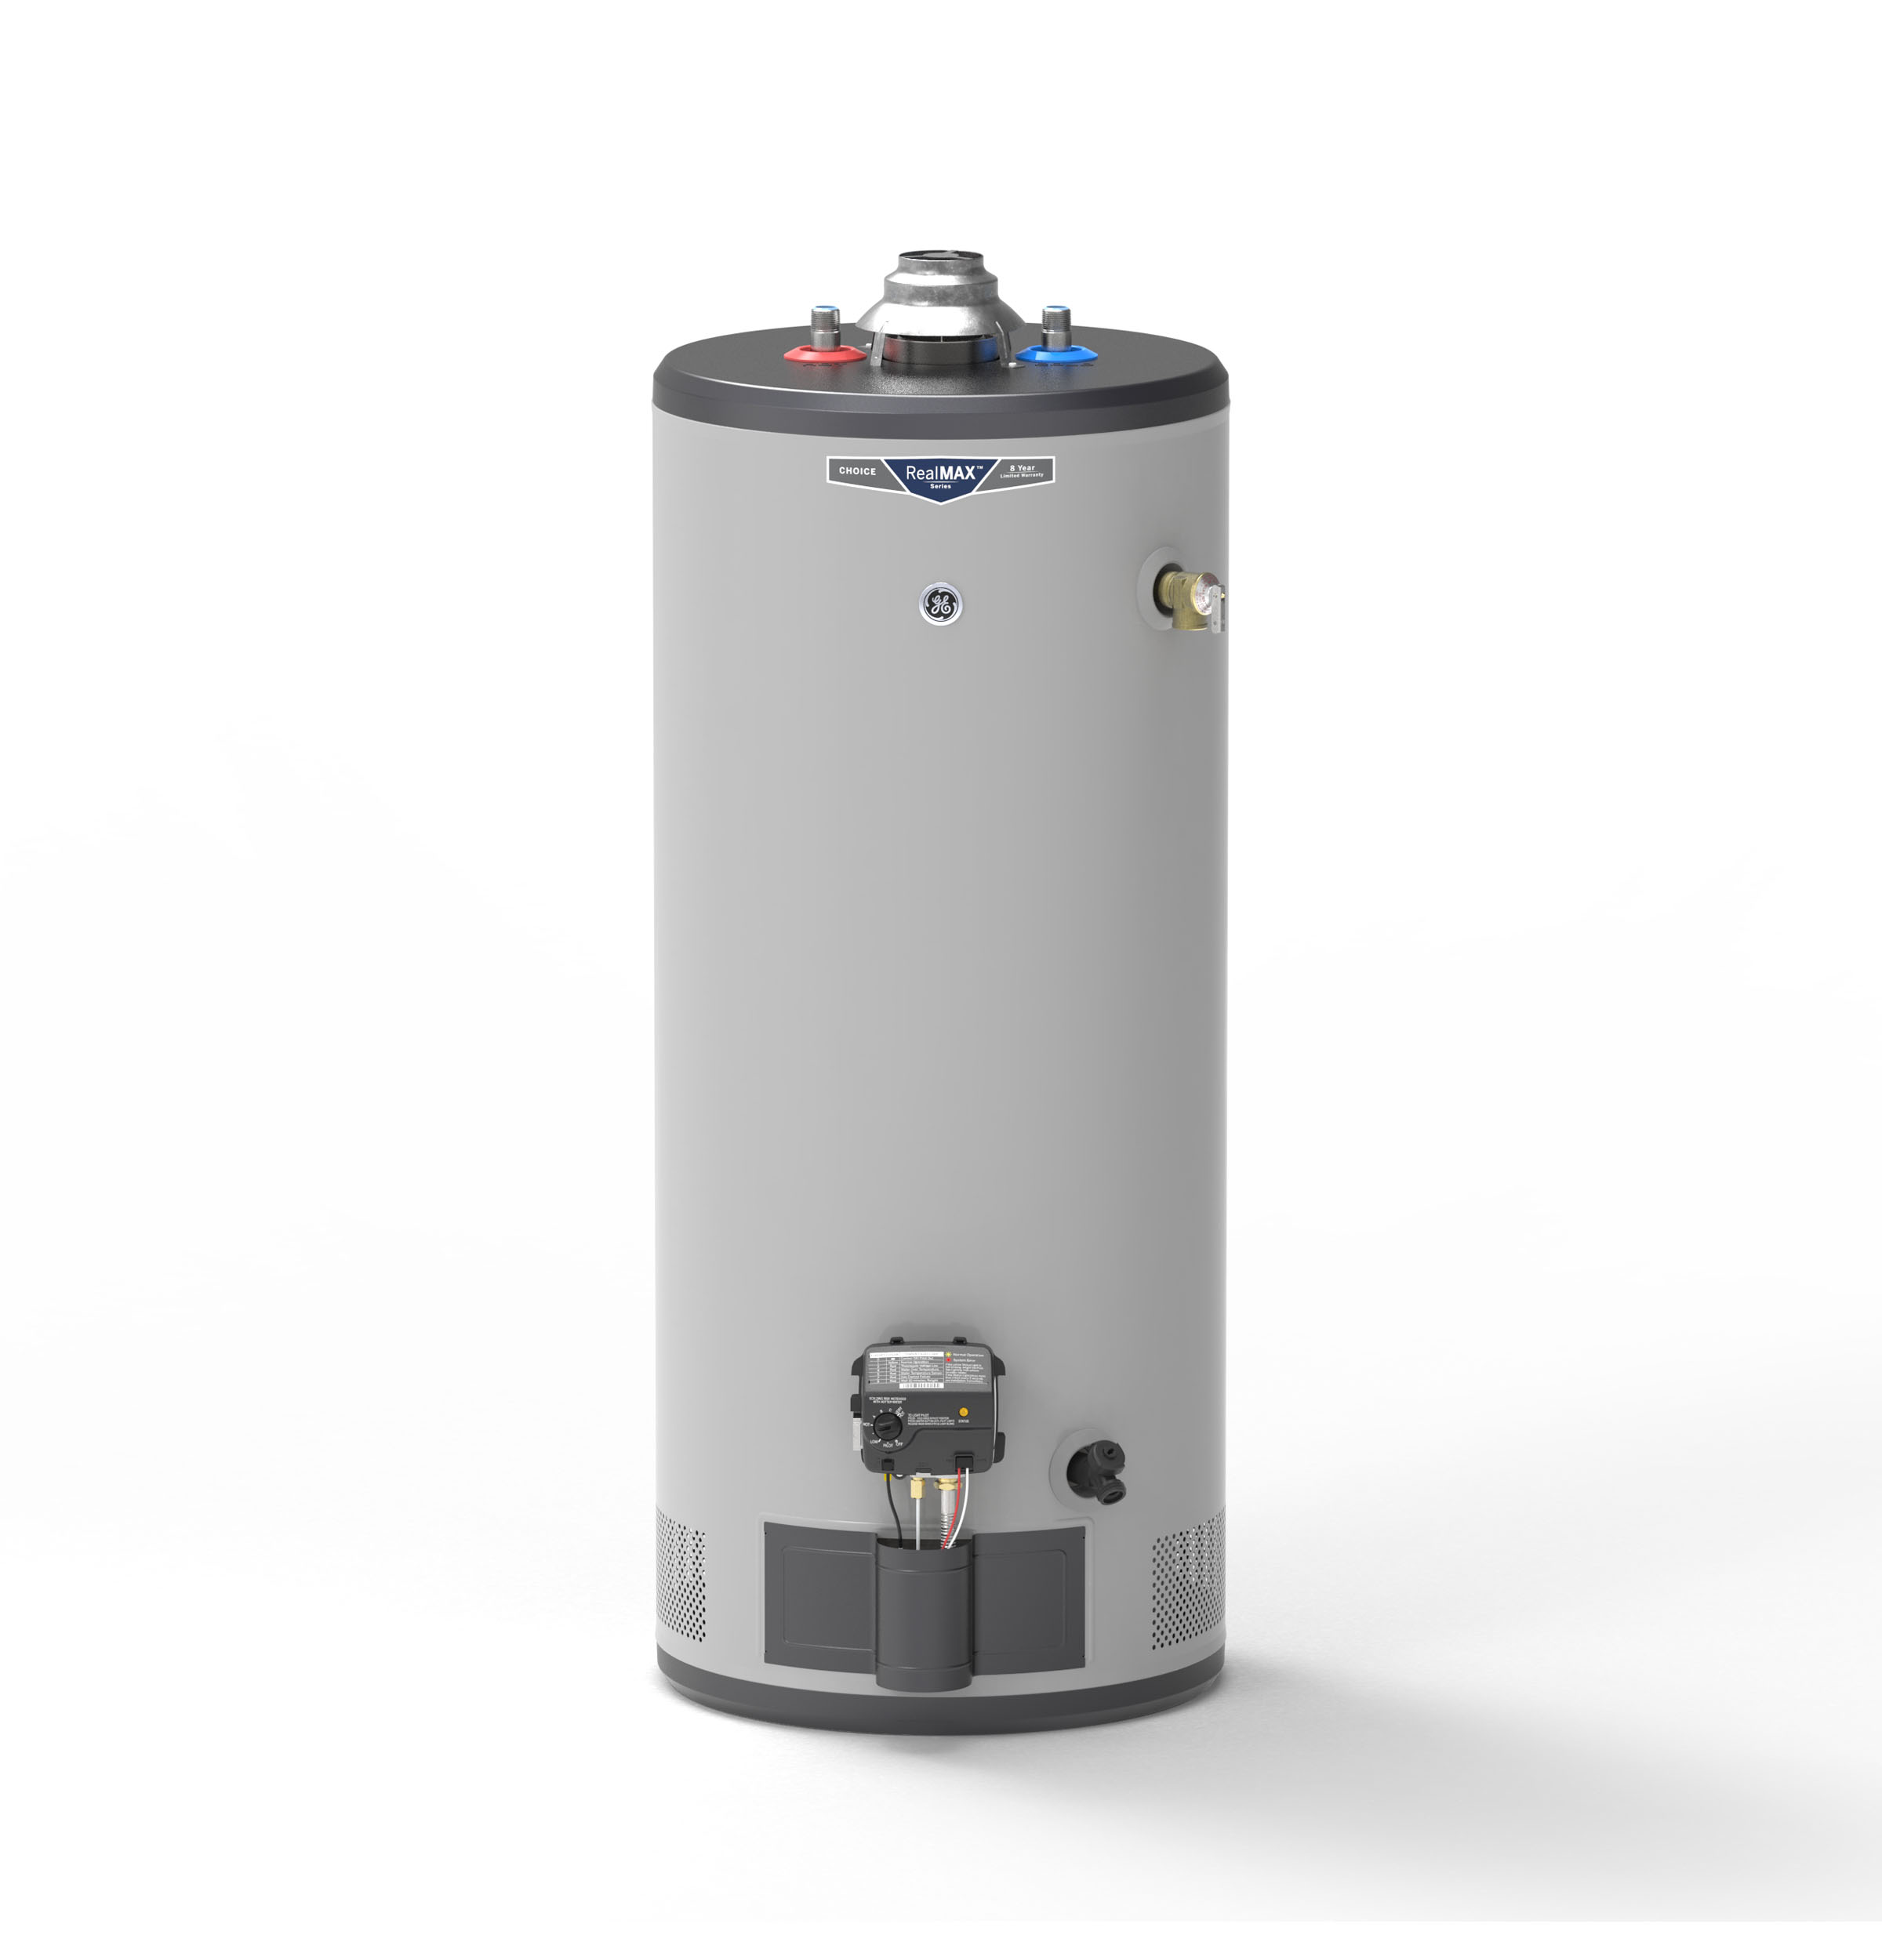 GE RealMAX Choice 30-Gallon Short Natural Gas Atmospheric Water Heater